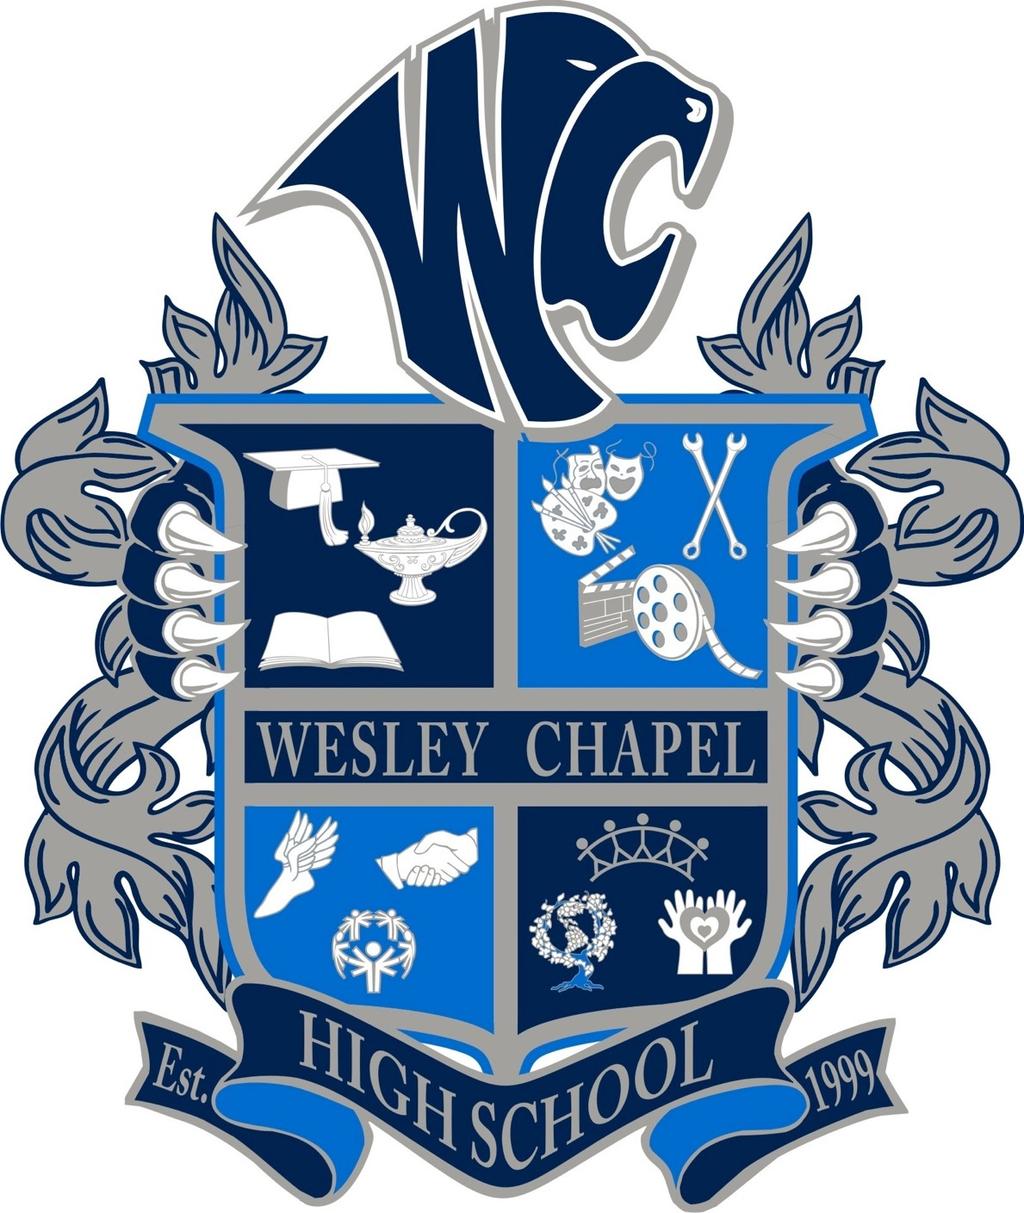 WESLEY CHAPEL HIGH SCHOOL